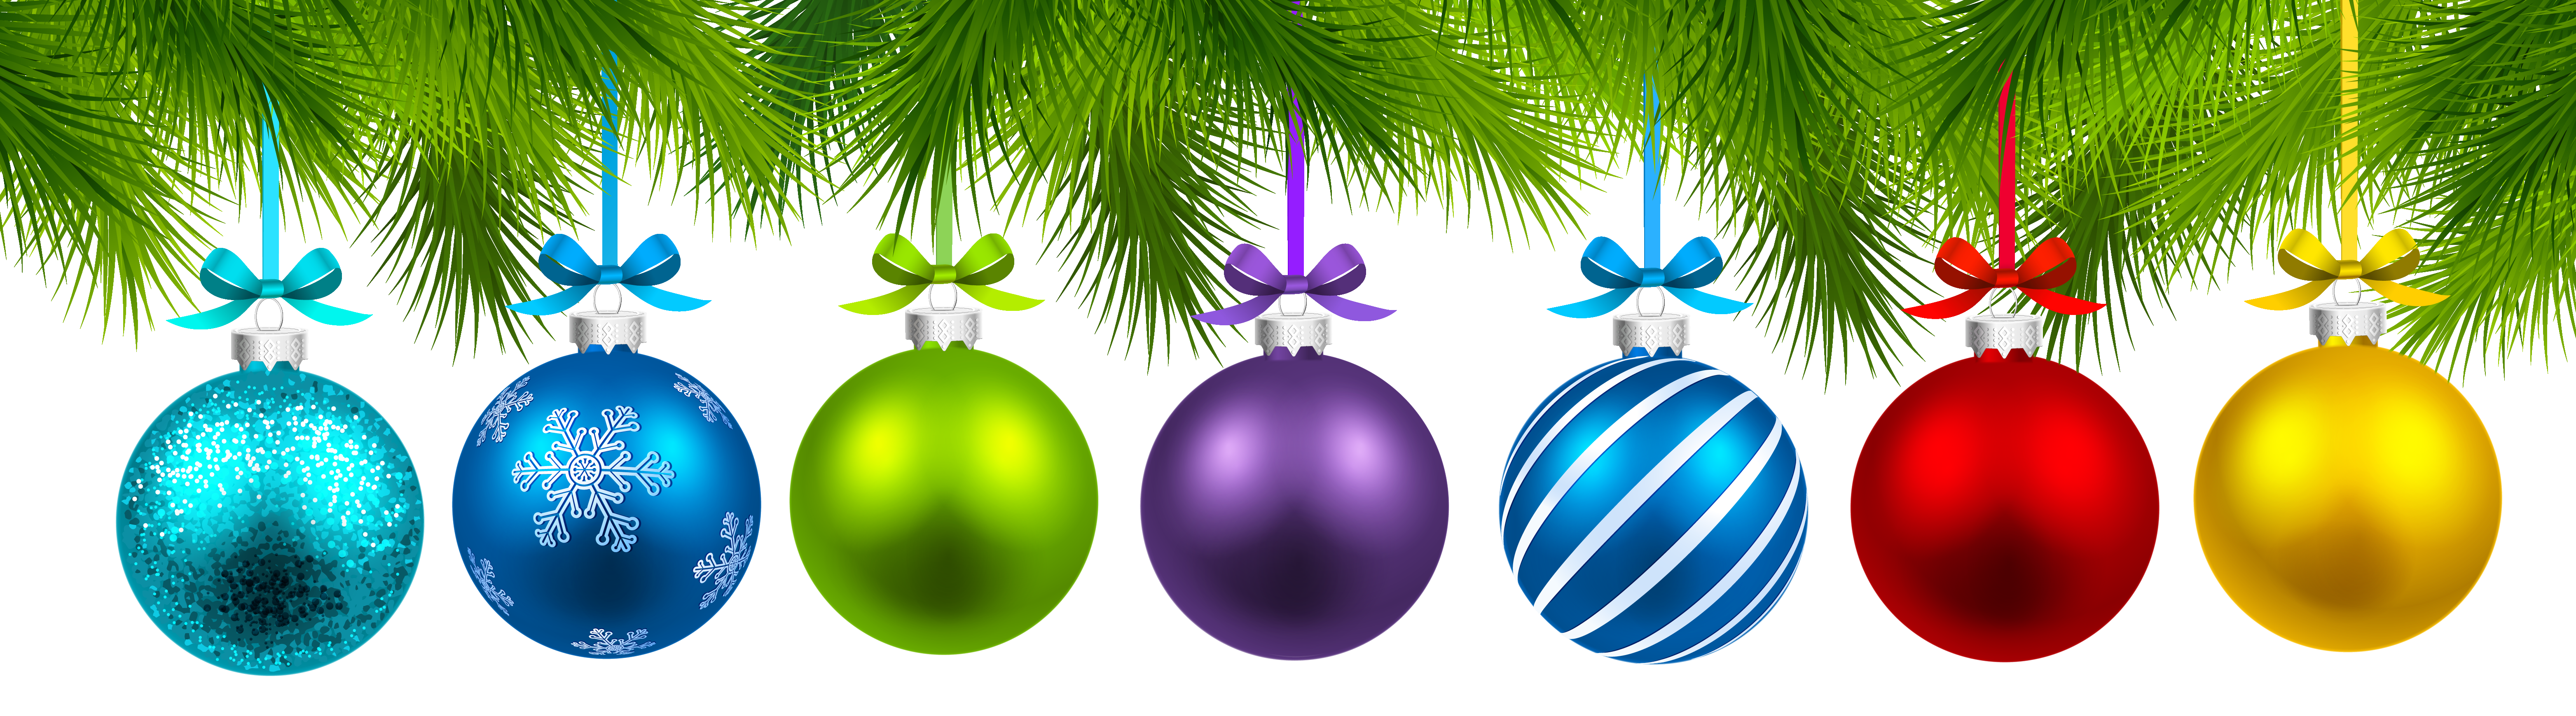 Decor Balls Ornament Tree Decoration Christmas PNG Image